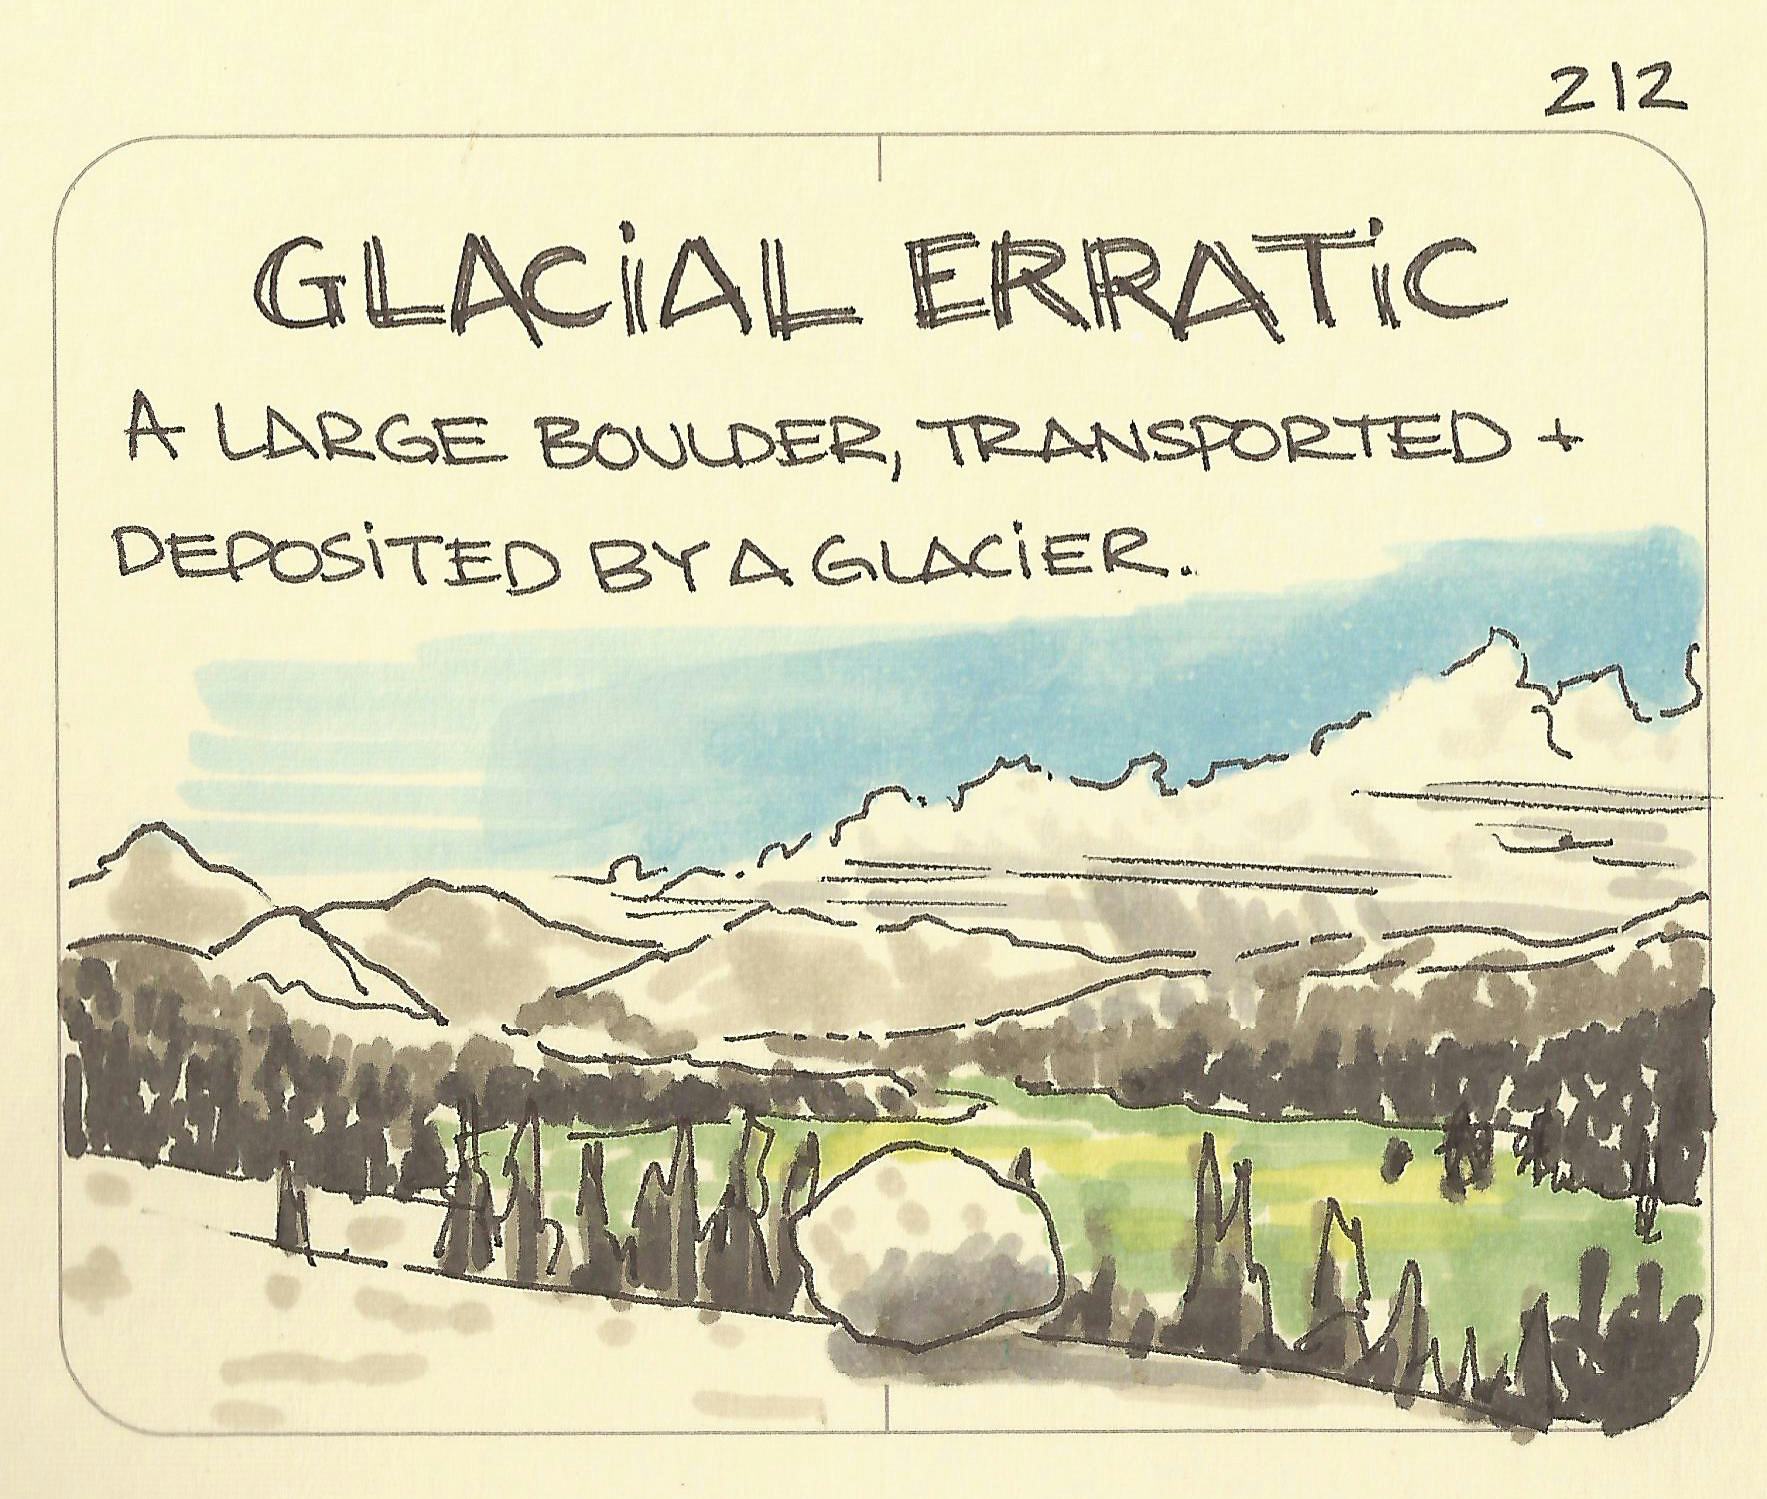 Glacial erratic - Sketchplanations